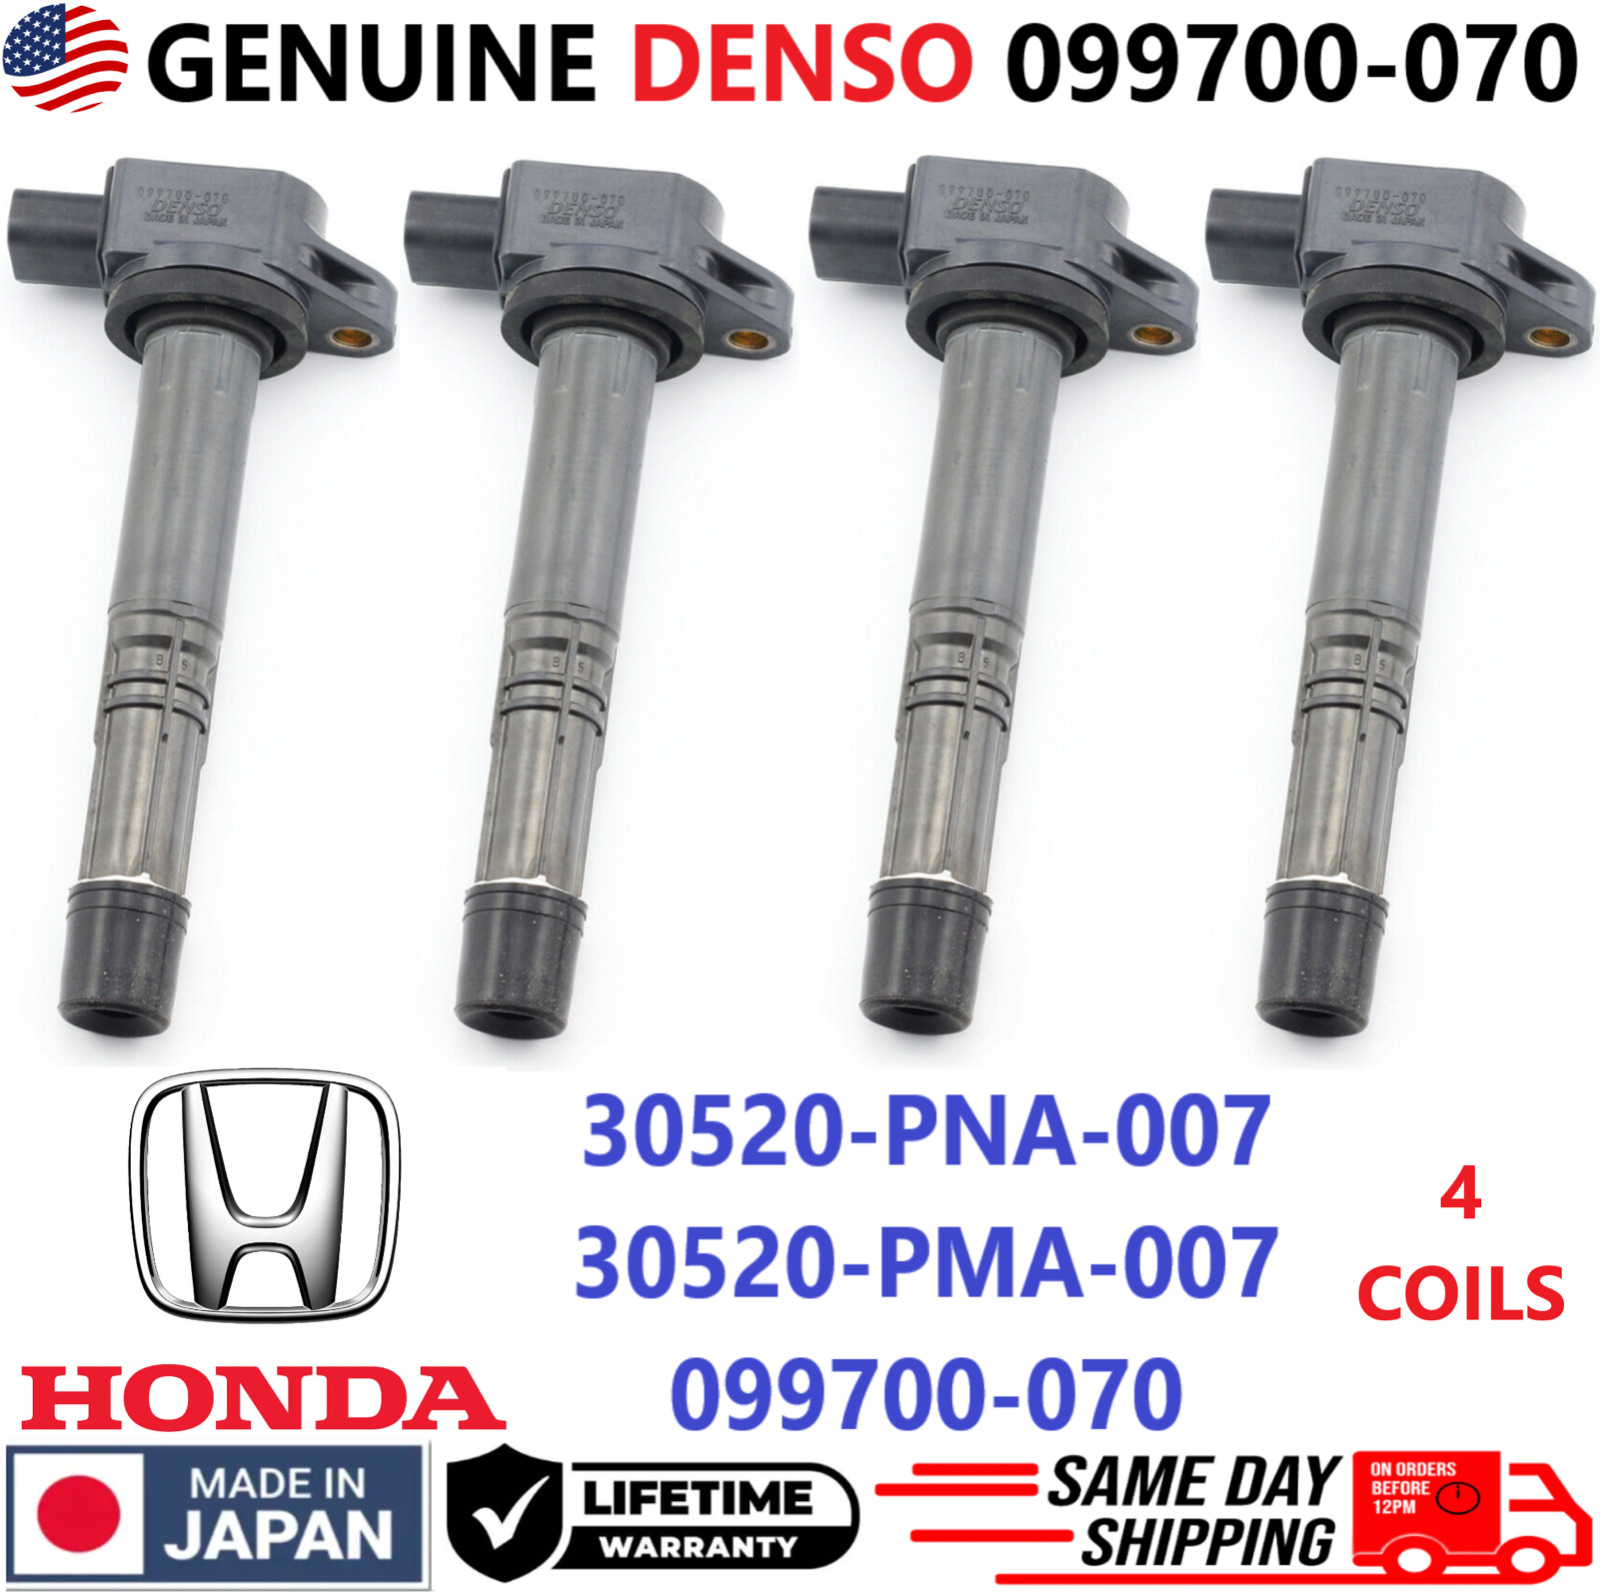 GENUINE DENSO Ignition Coils For 2000-2011 Honda Acura 2.0L 2.4L I4, 099700-070